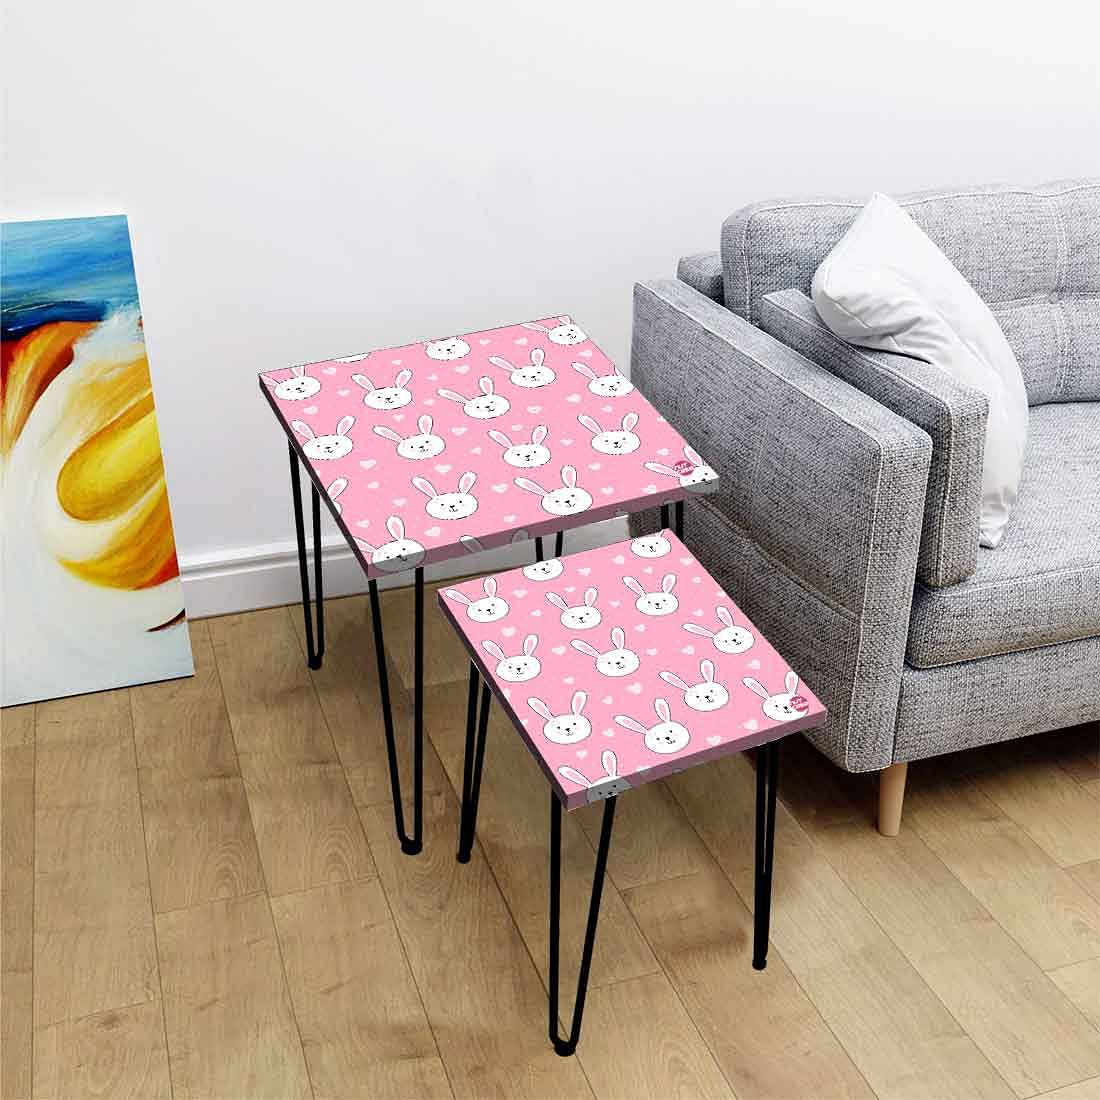 Nest of Tables Coffee Table for Modern Decor House - Bunny Face Nutcase